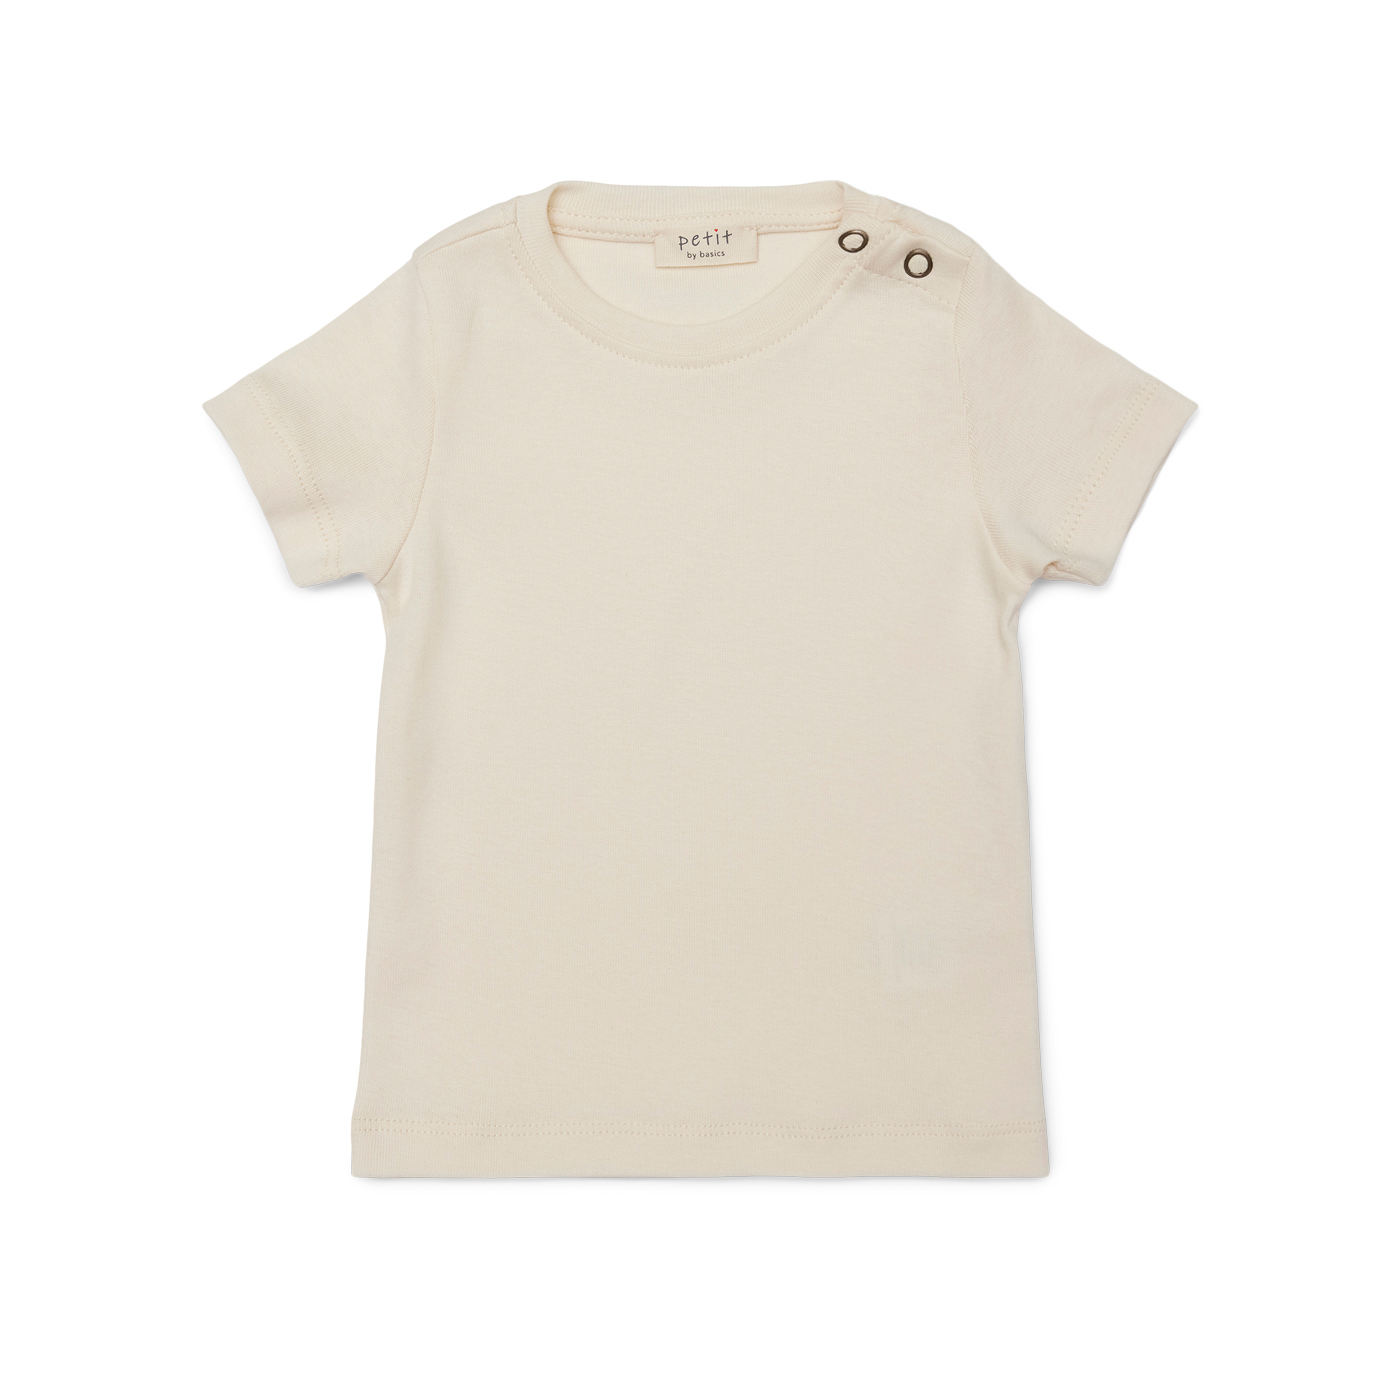 By Basics - Petit T-shirt *Issa* øko-tex Bomuld - Off white